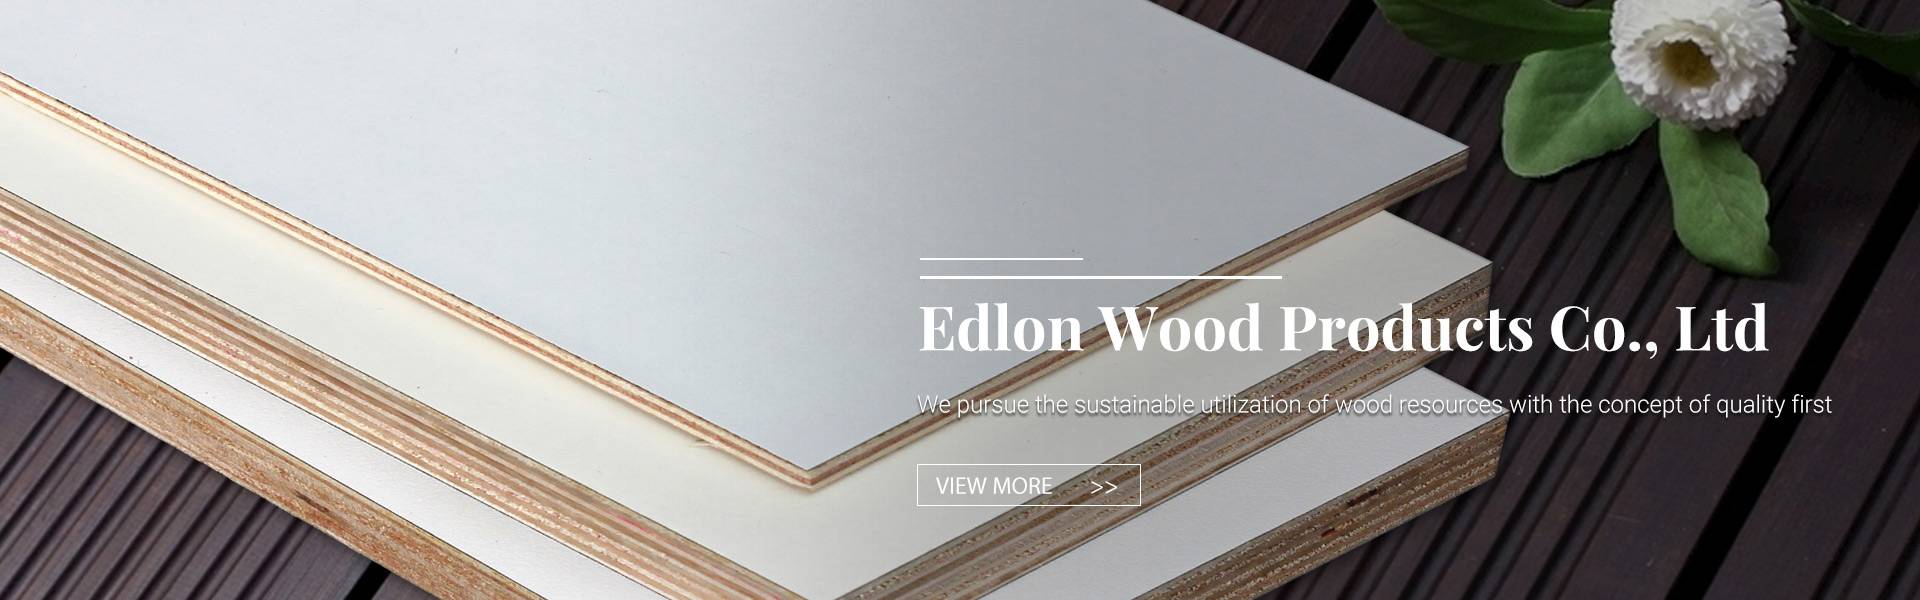 Edlon Wood Products Co., Ltd